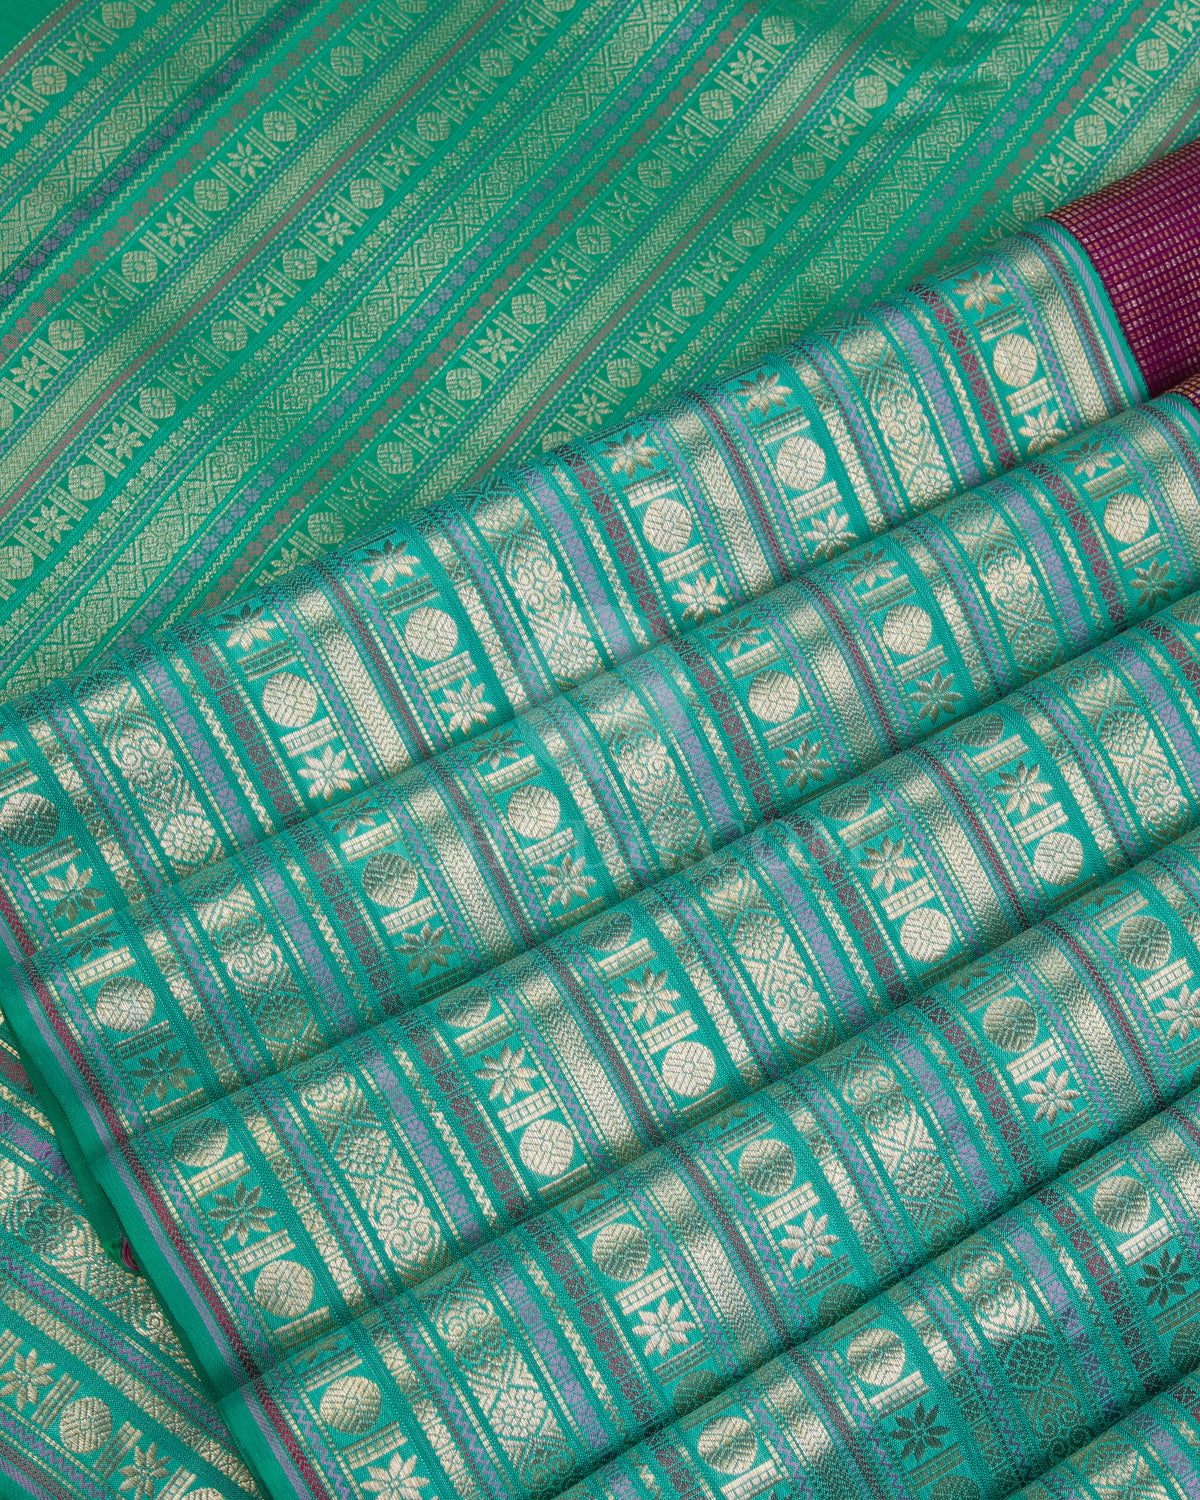 Violet & Sea Foam Green Kanjivaram Silk Saree - S1080(B) - View 4